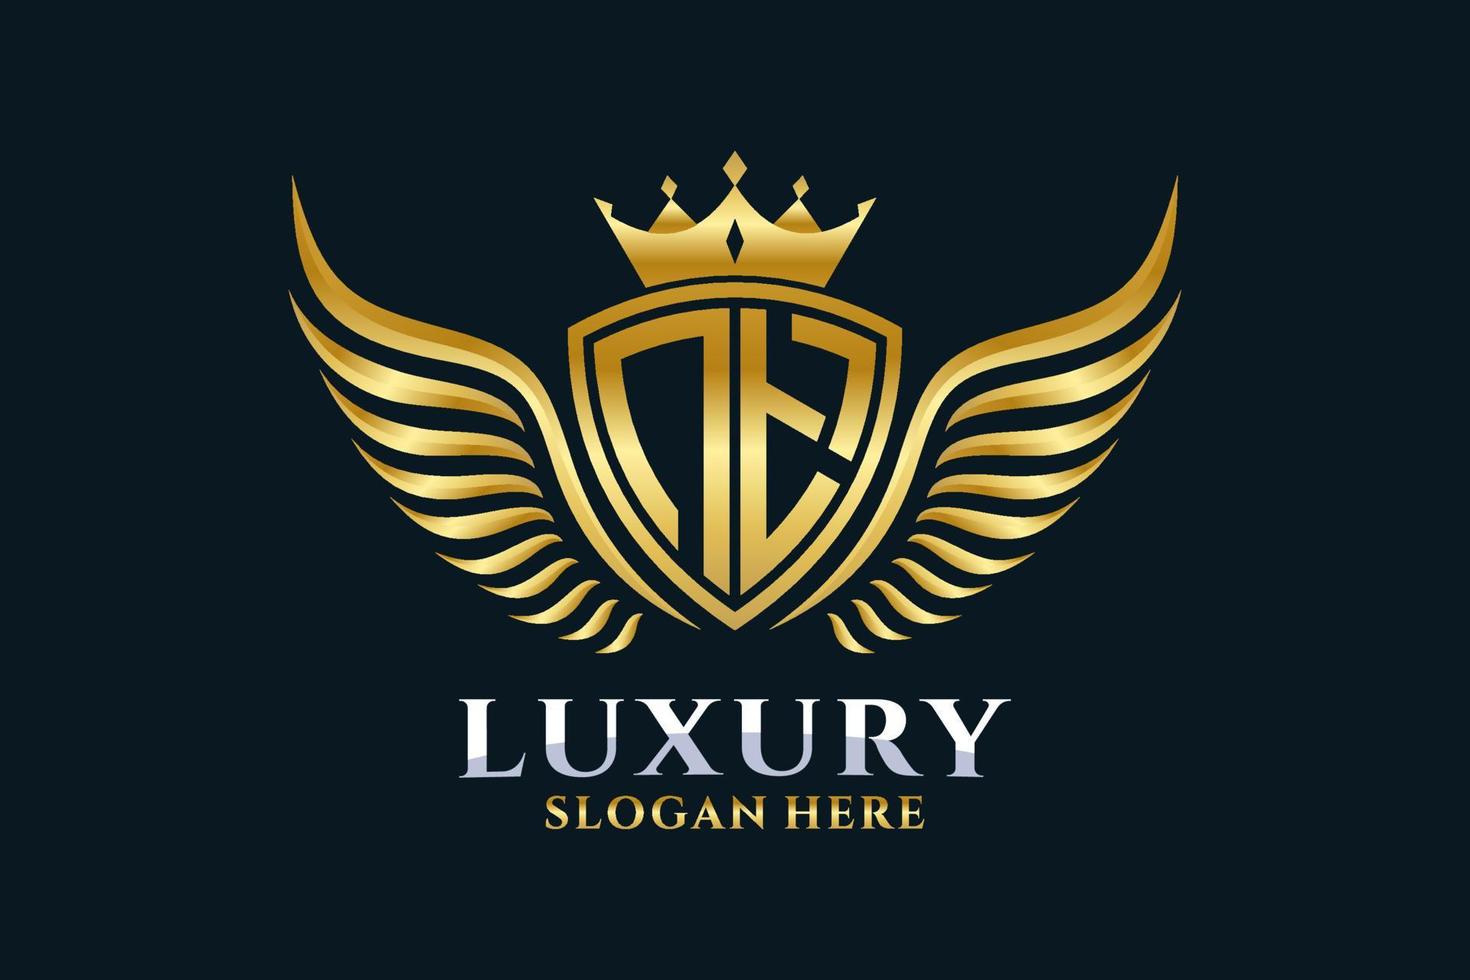 luxe Koninklijk vleugel brief nt kam goud kleur logo vector, zege logo, kam logo, vleugel logo, vector logo sjabloon.